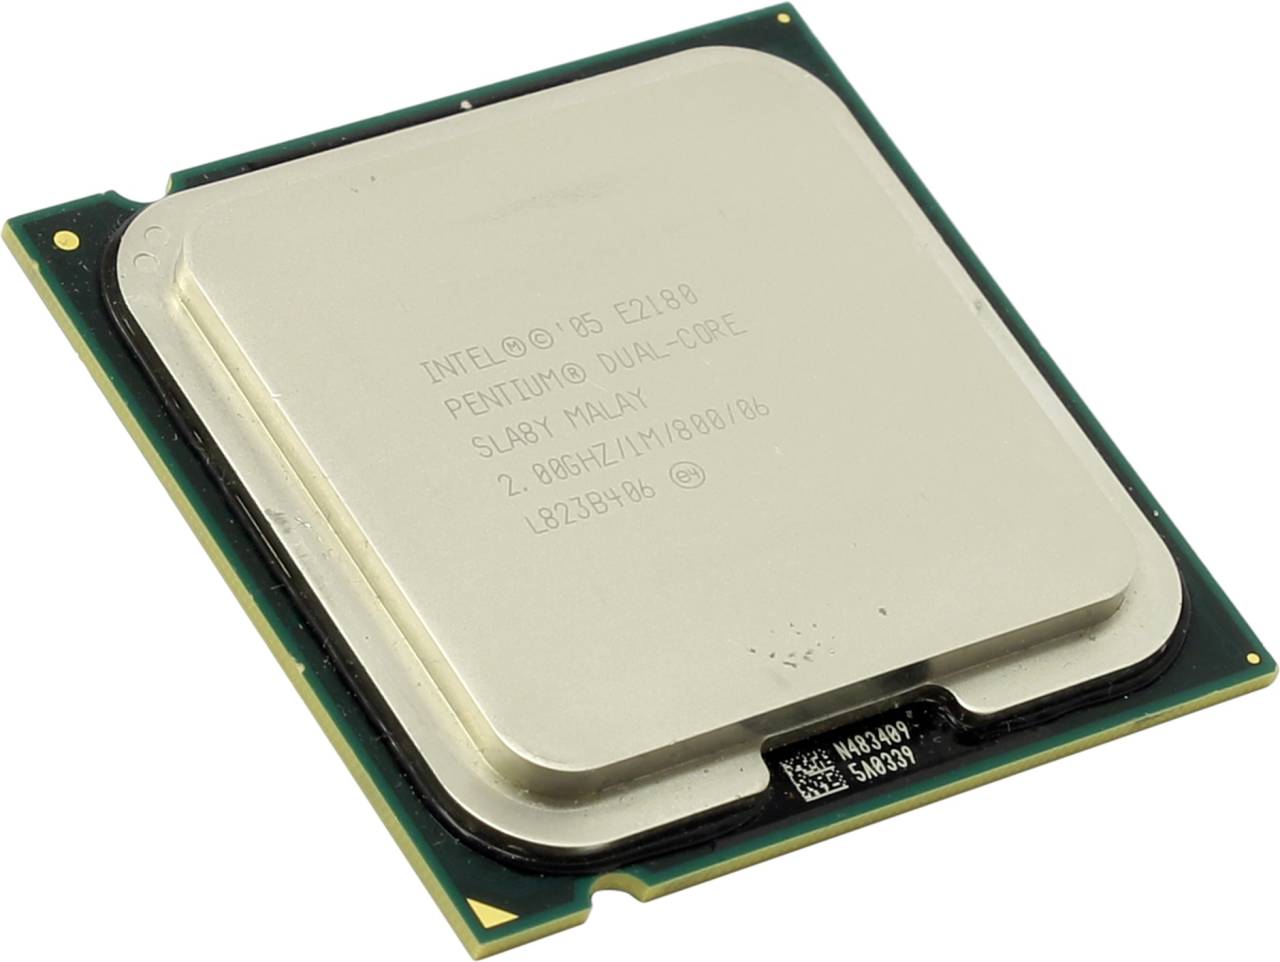   Intel Pentium Dual-Core E2180 2.0 / 1/ 800 775-LGA  !!!   !!!